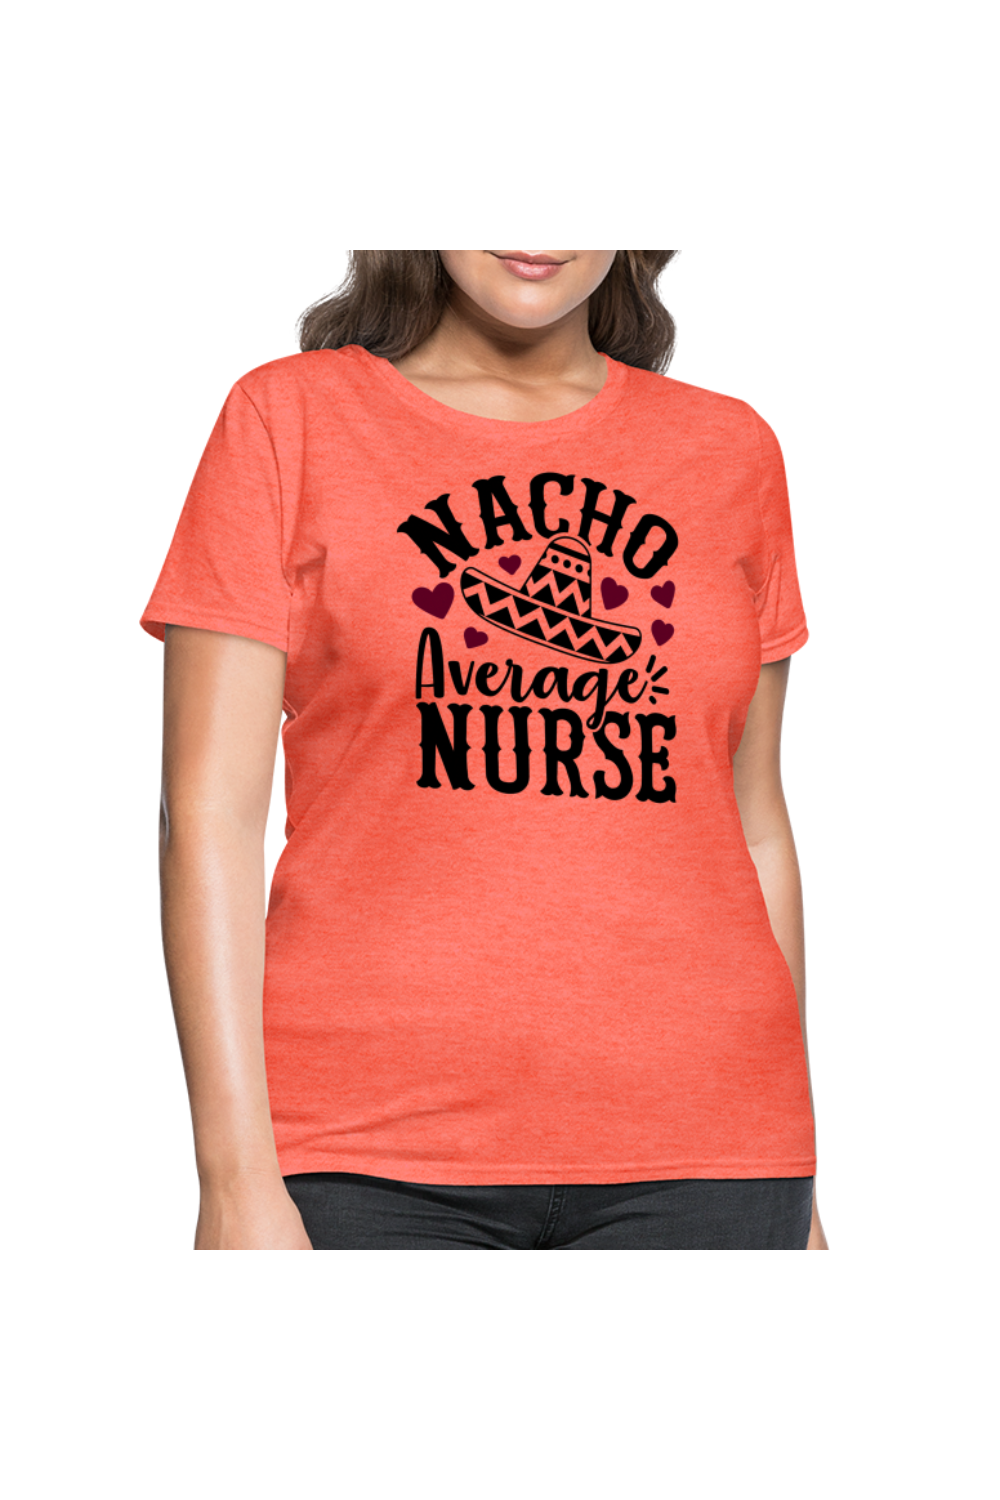 Nacho Average Nurse Women's Nurse T-Shirt - heather coral